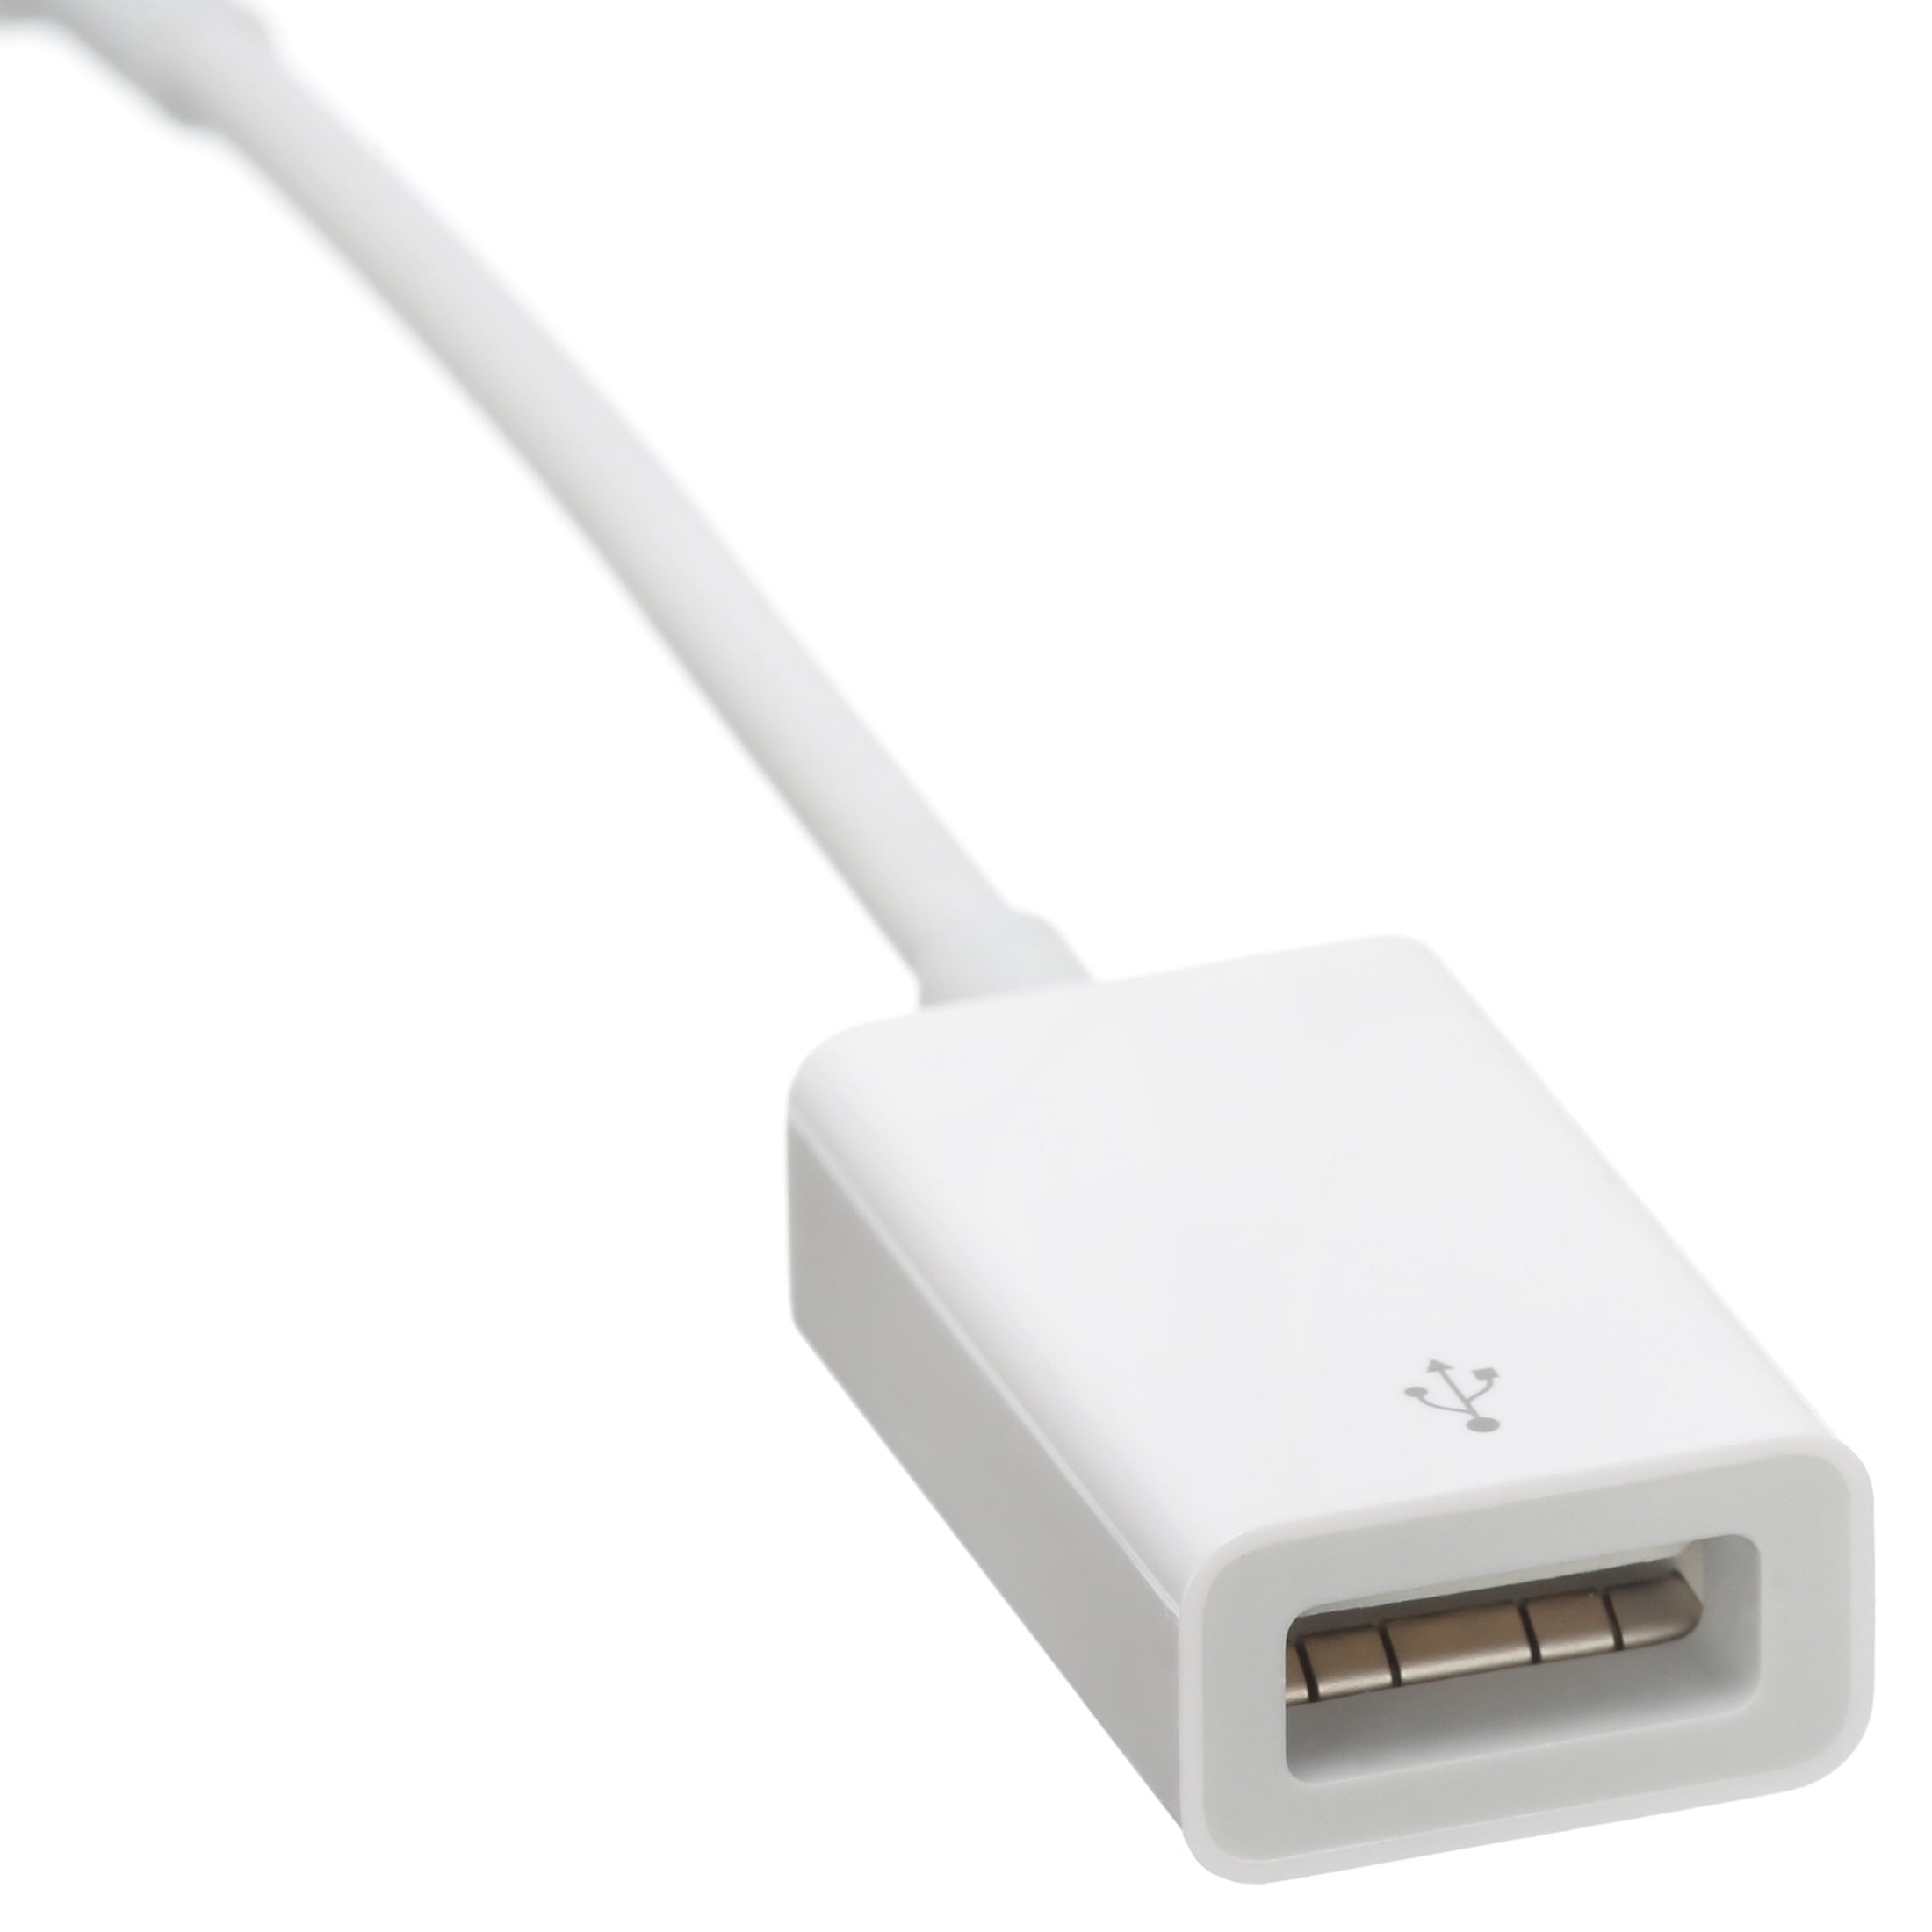 USB-C to Adapter - Walmart.com